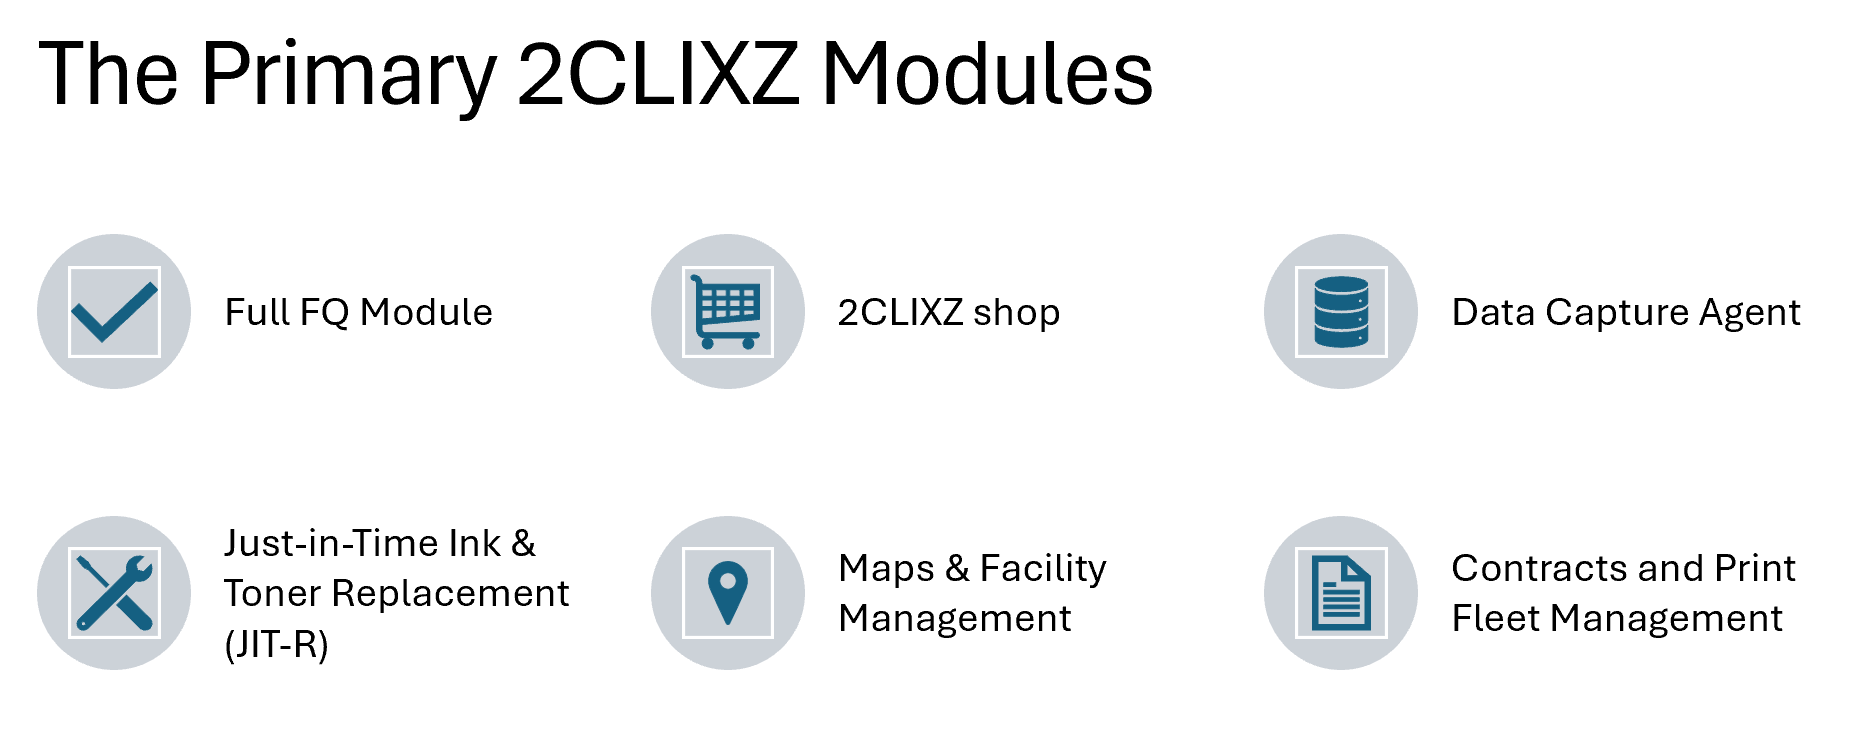 The Primary 2CLIXZ Modules